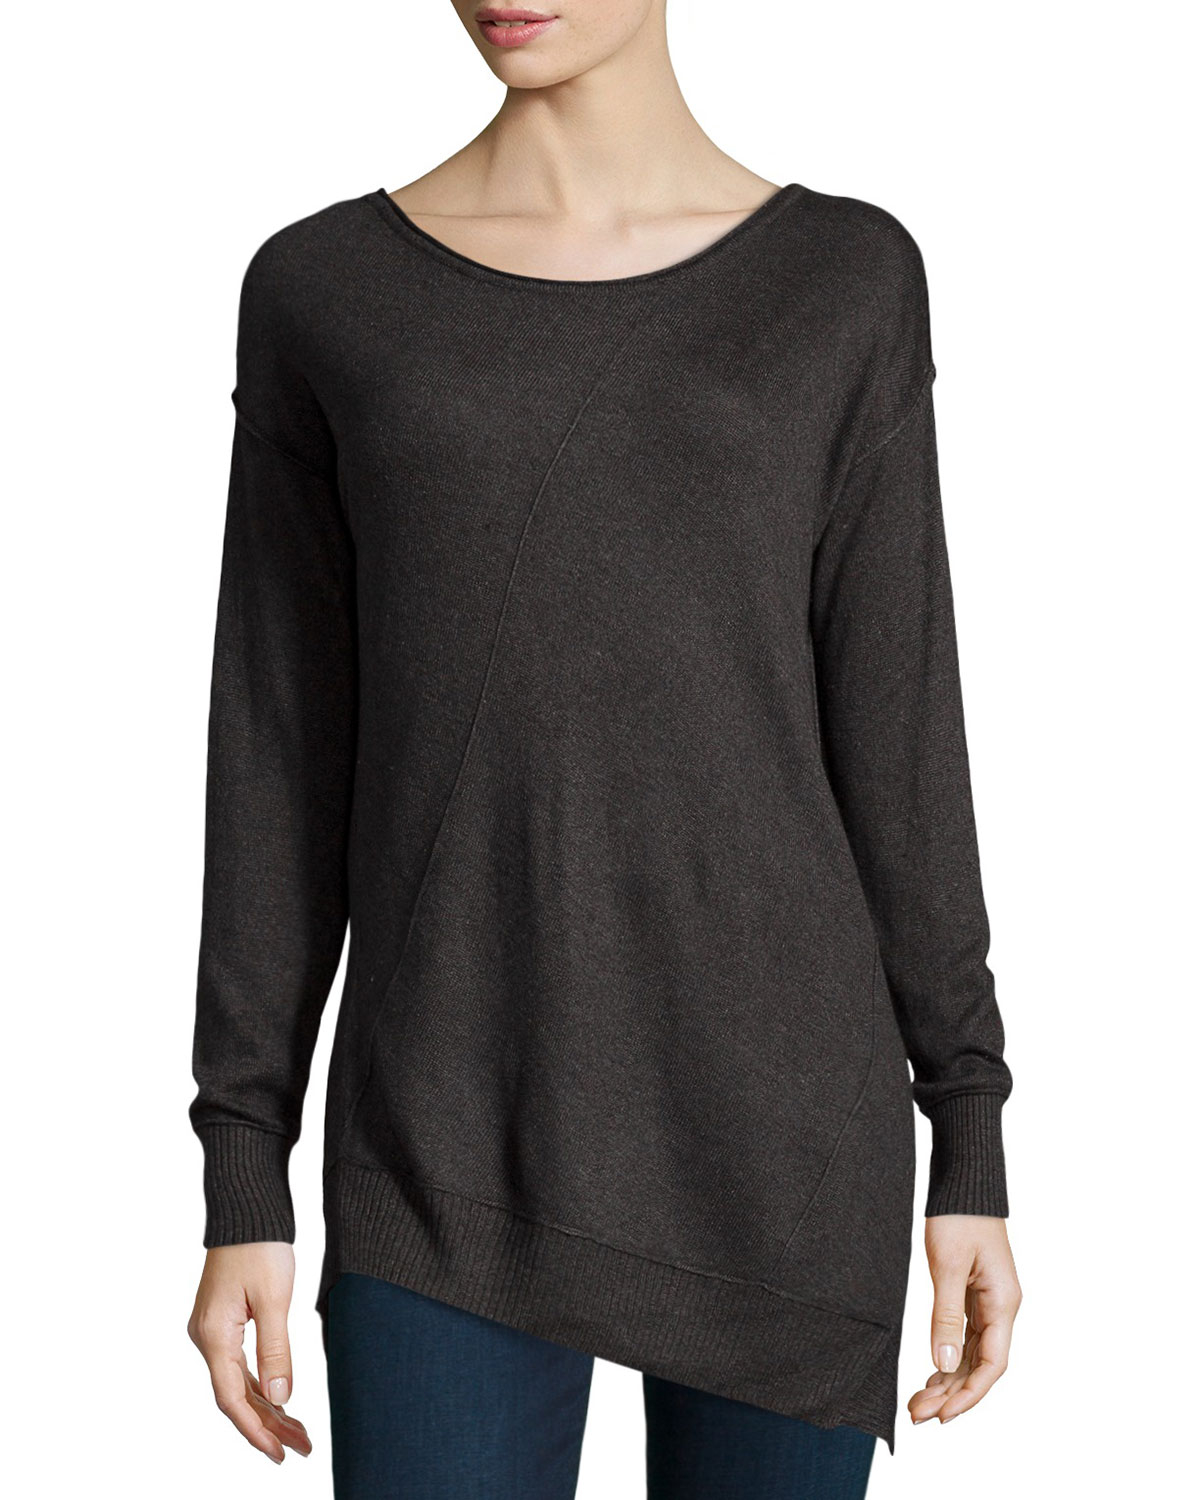 Lyst - Love Scarlett Cashmere/Silk Asymmetric Piped-Seam Sweater in Gray